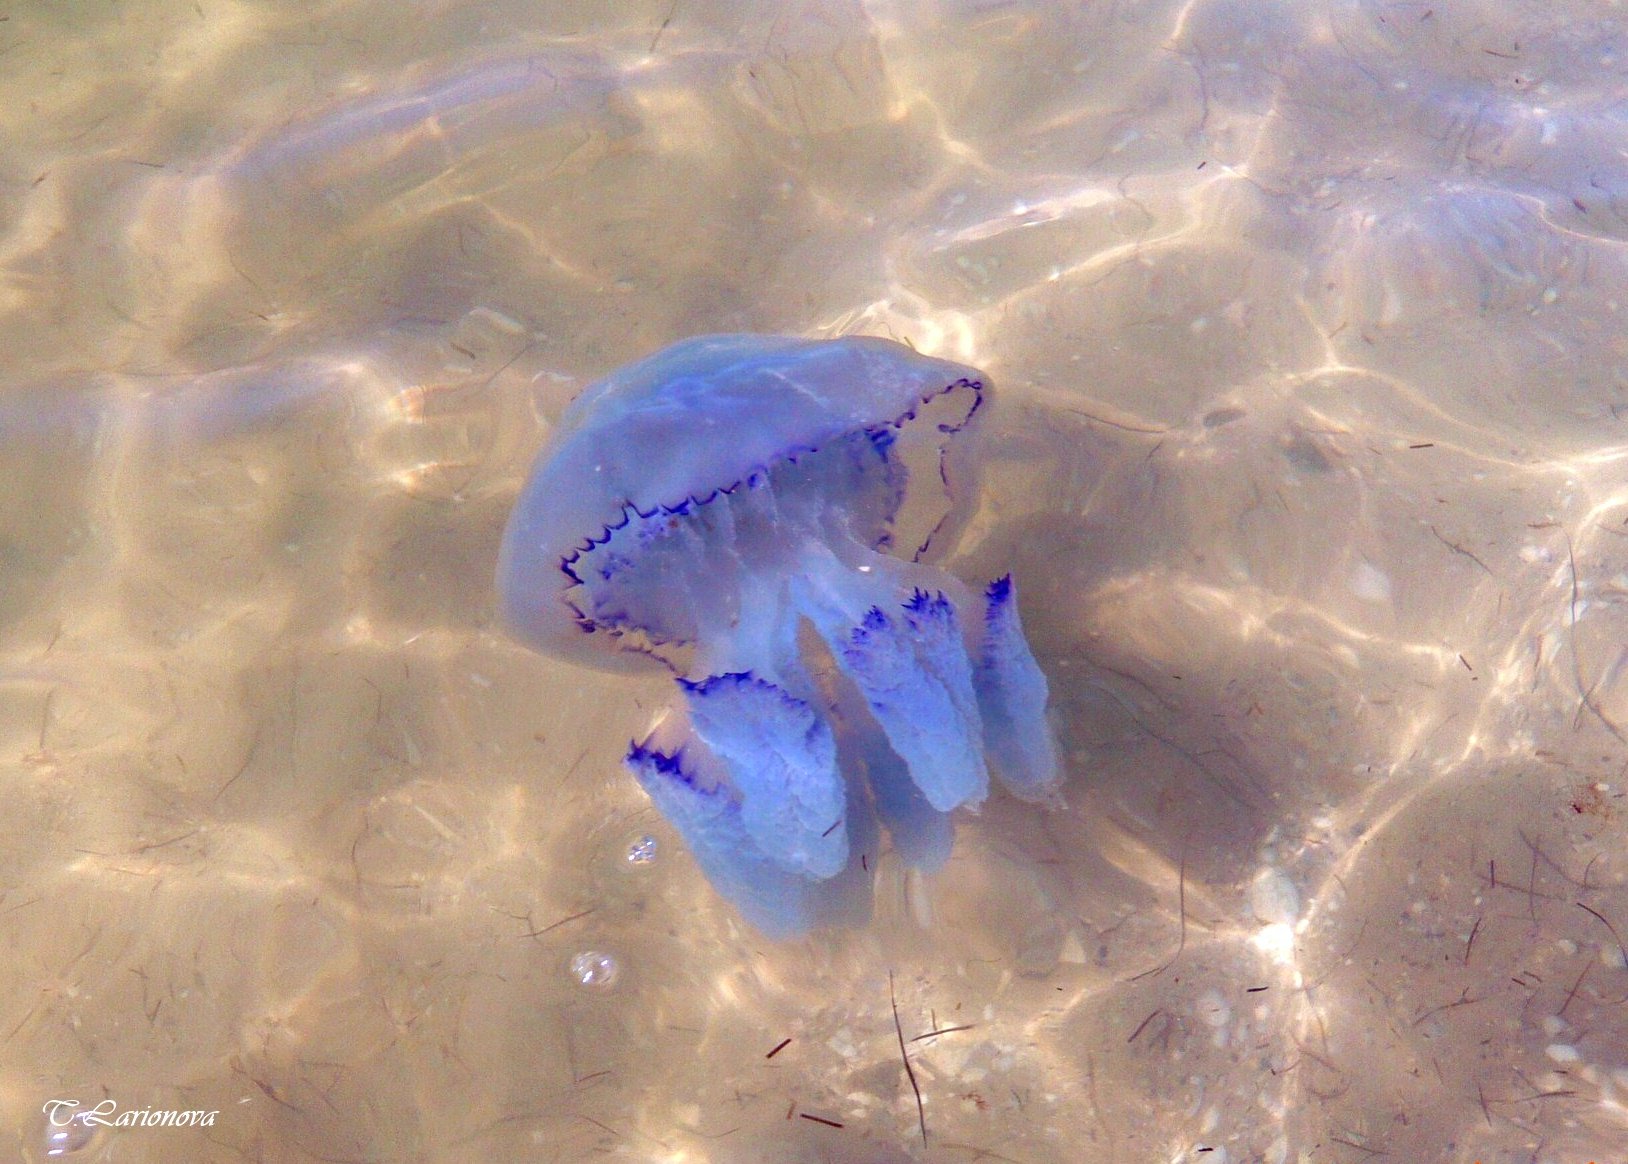 Медуза корнерот